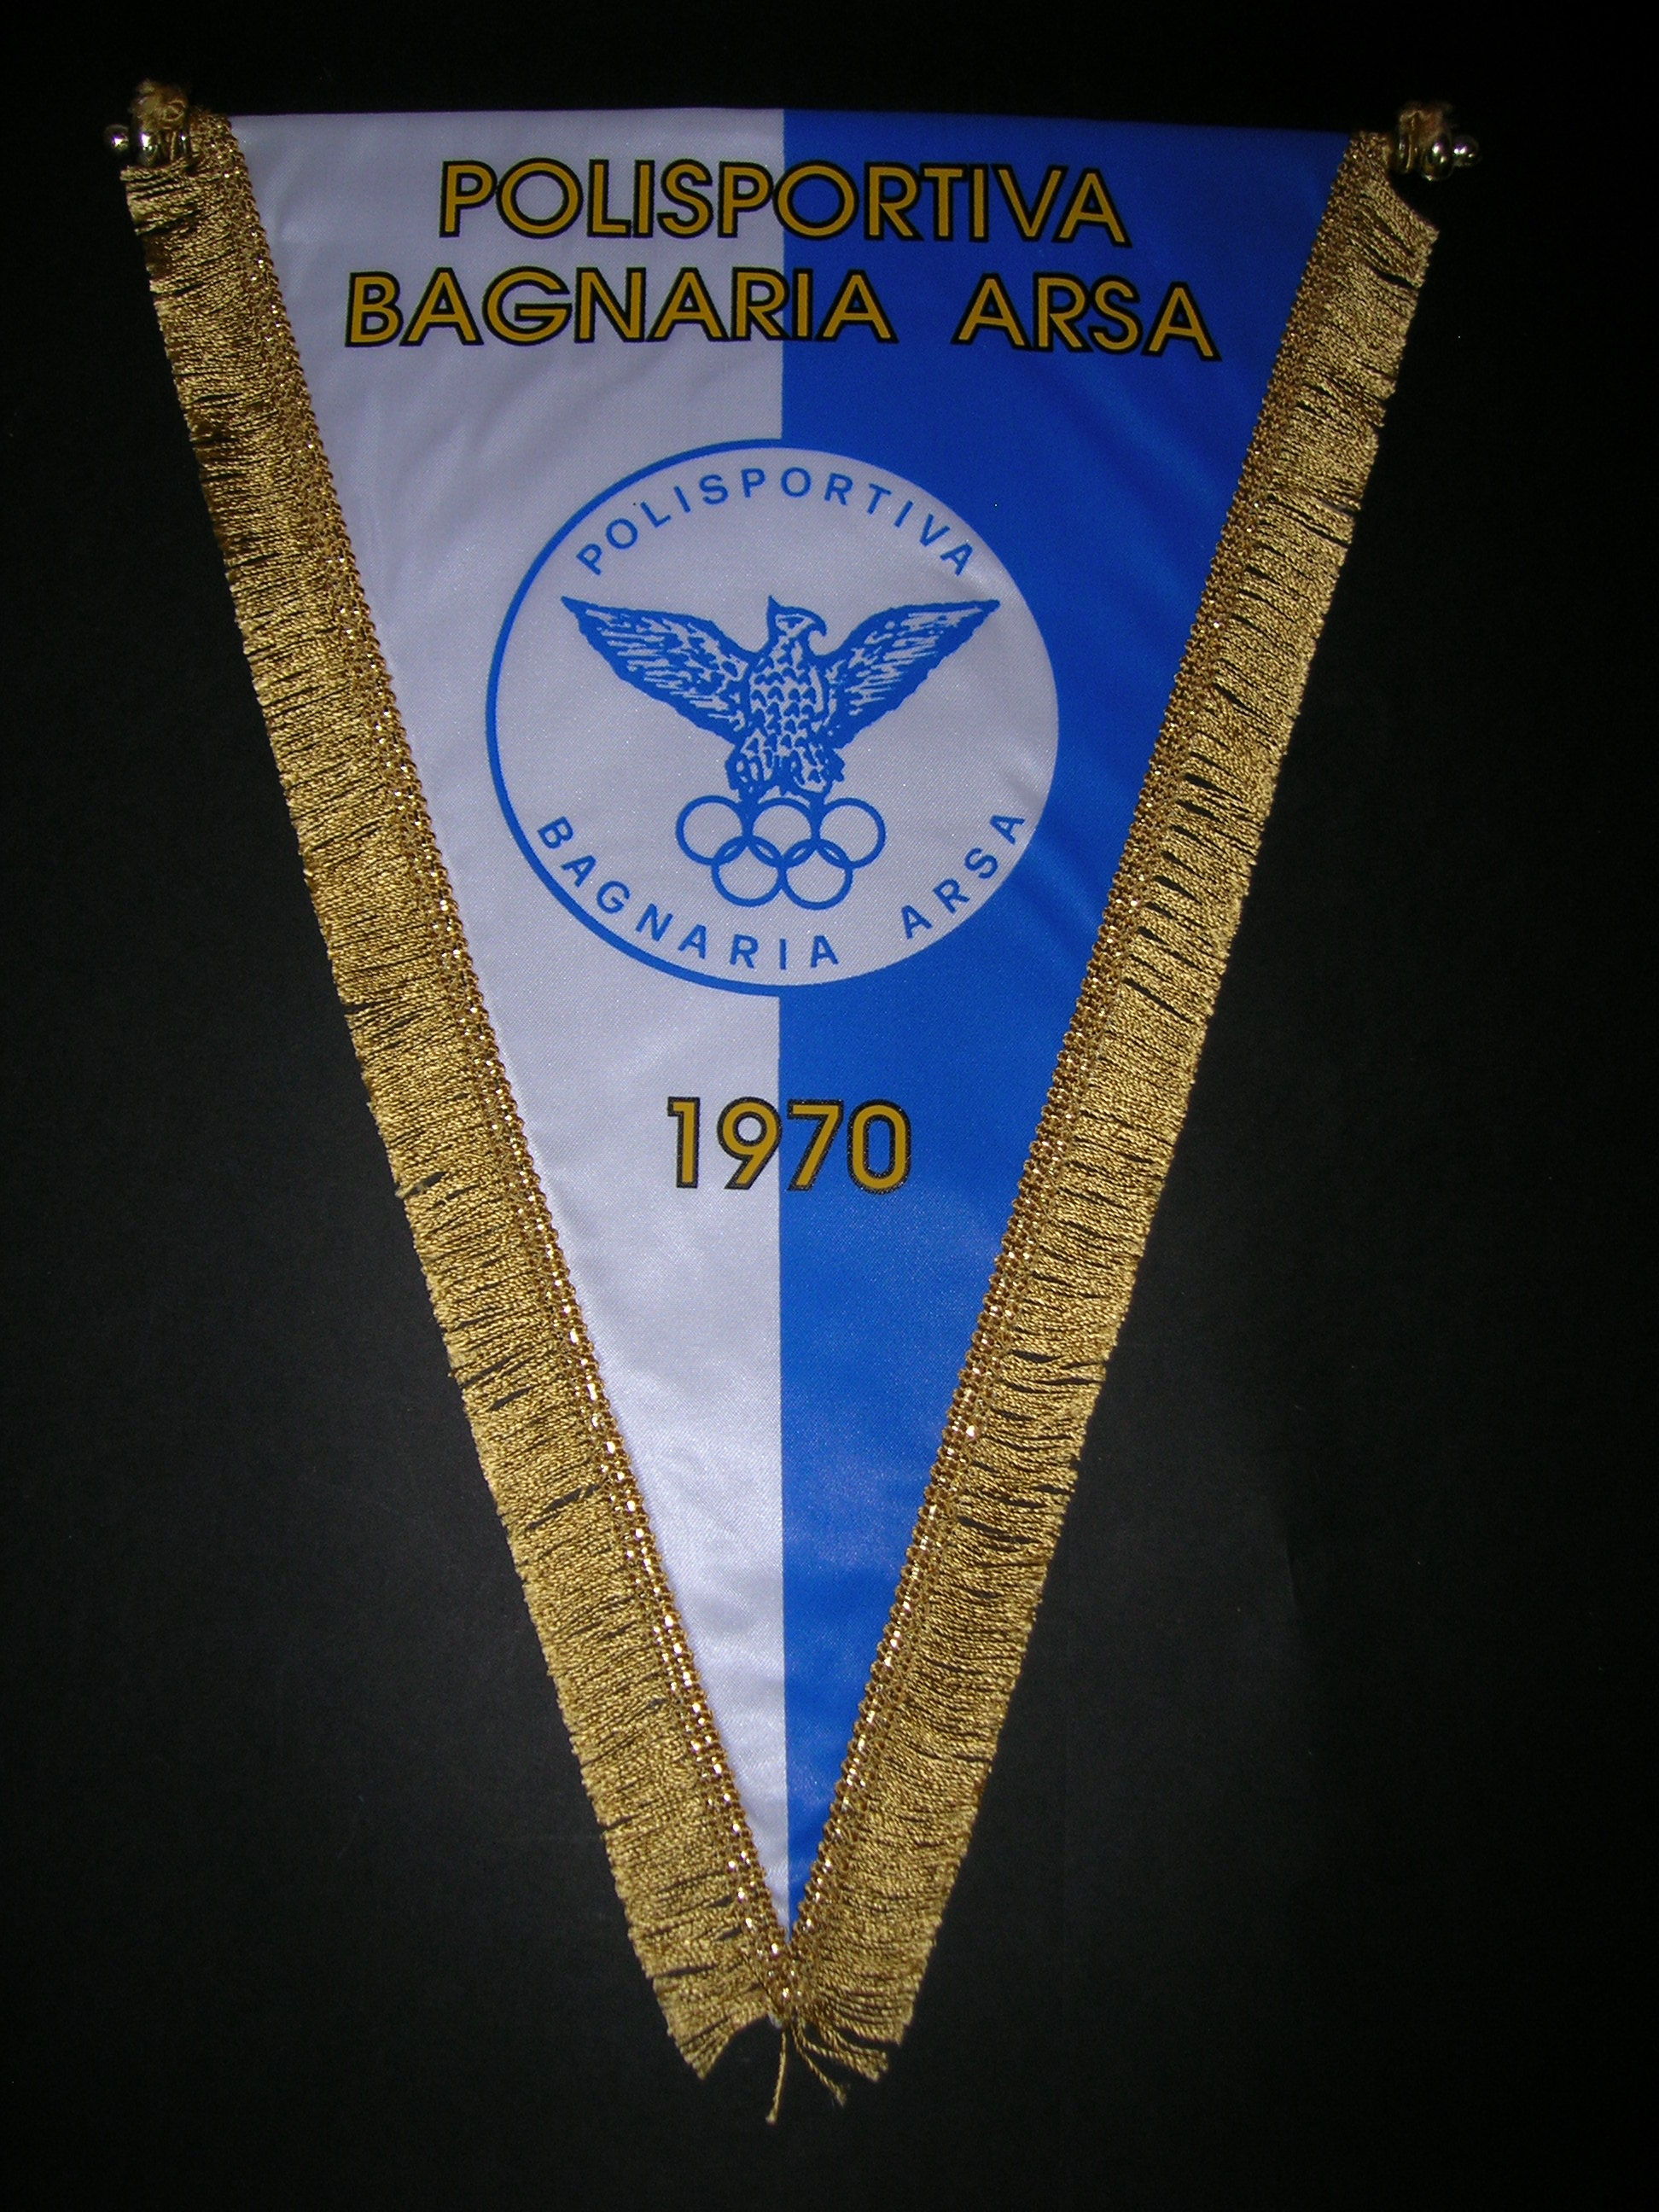 Polisportiva  Bagnaria  Arsa  243